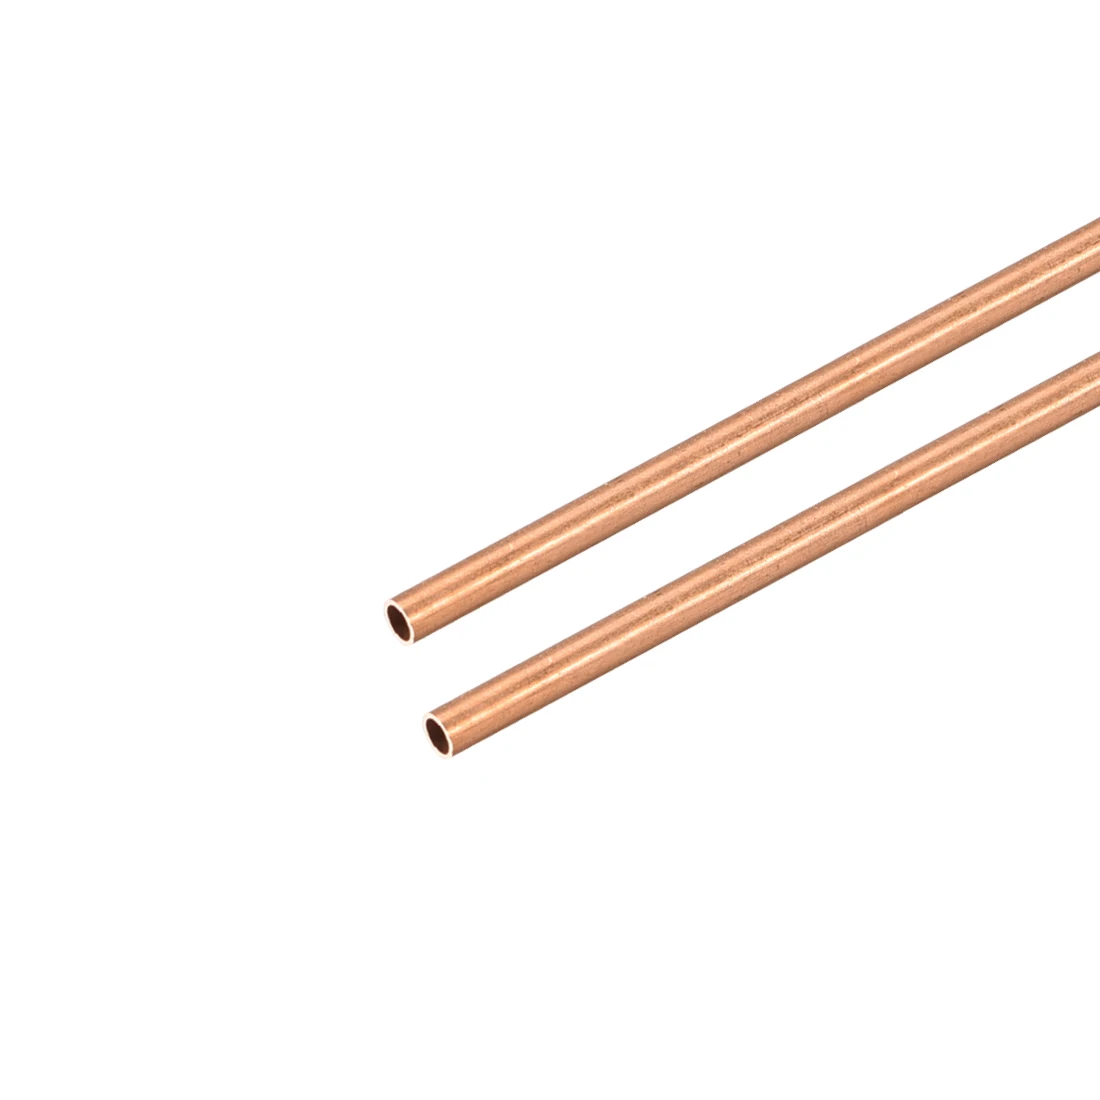 Copper Tubes Rod 3mm 4mm 5mm Internal Diameter 300mm Long Plumbing Pipe/Tube DIY